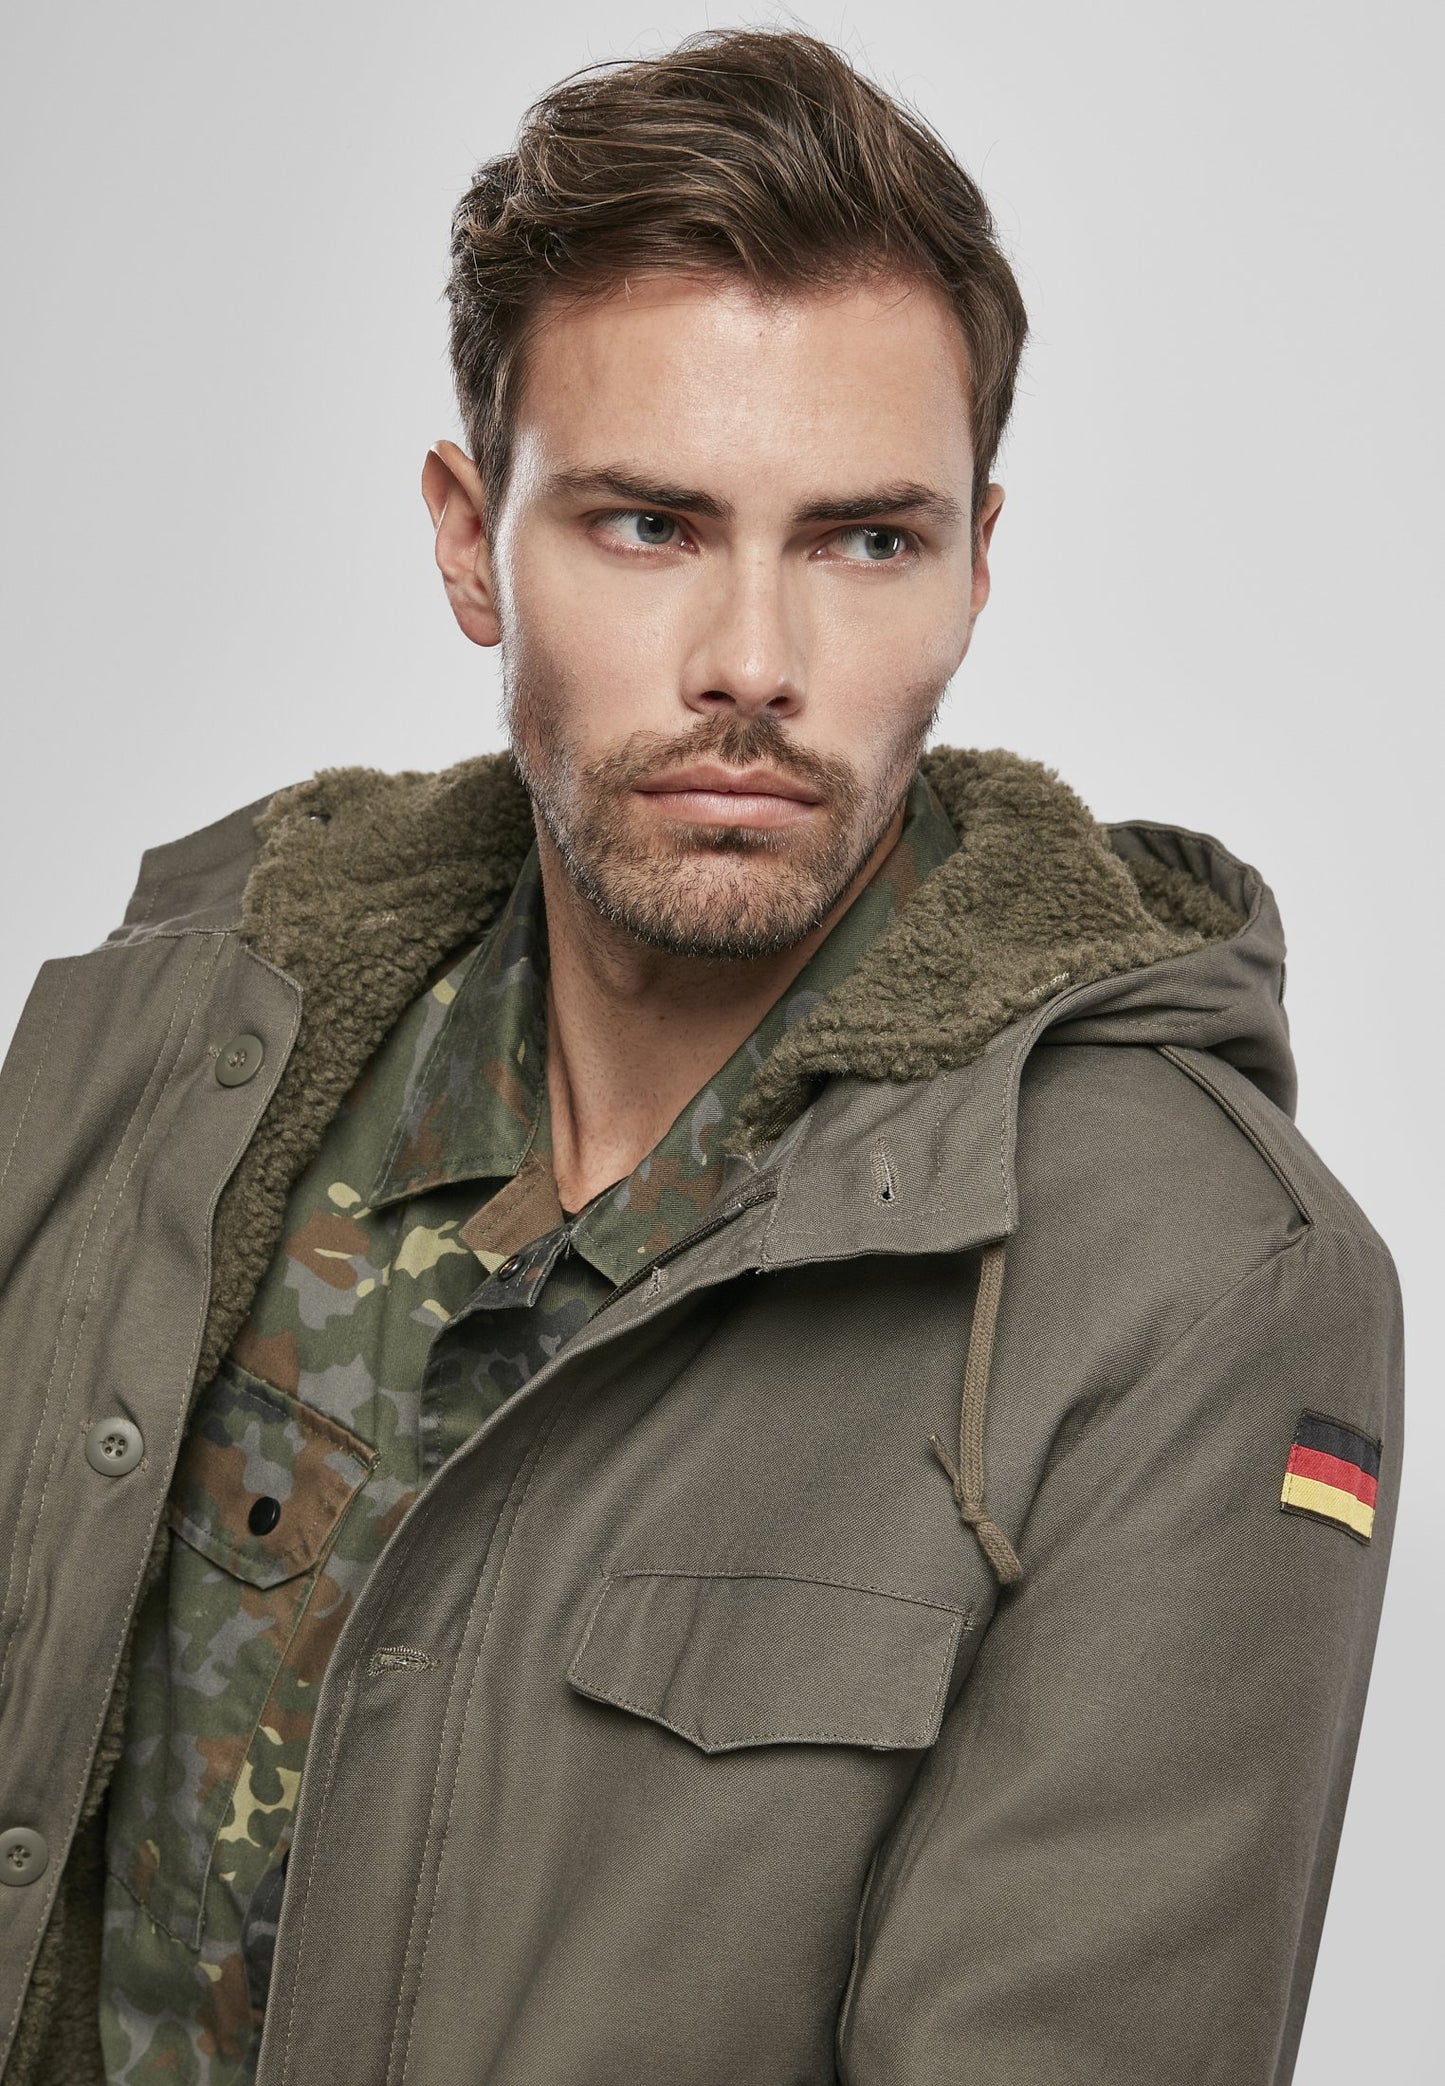 BW Parka (German Military Jacket)